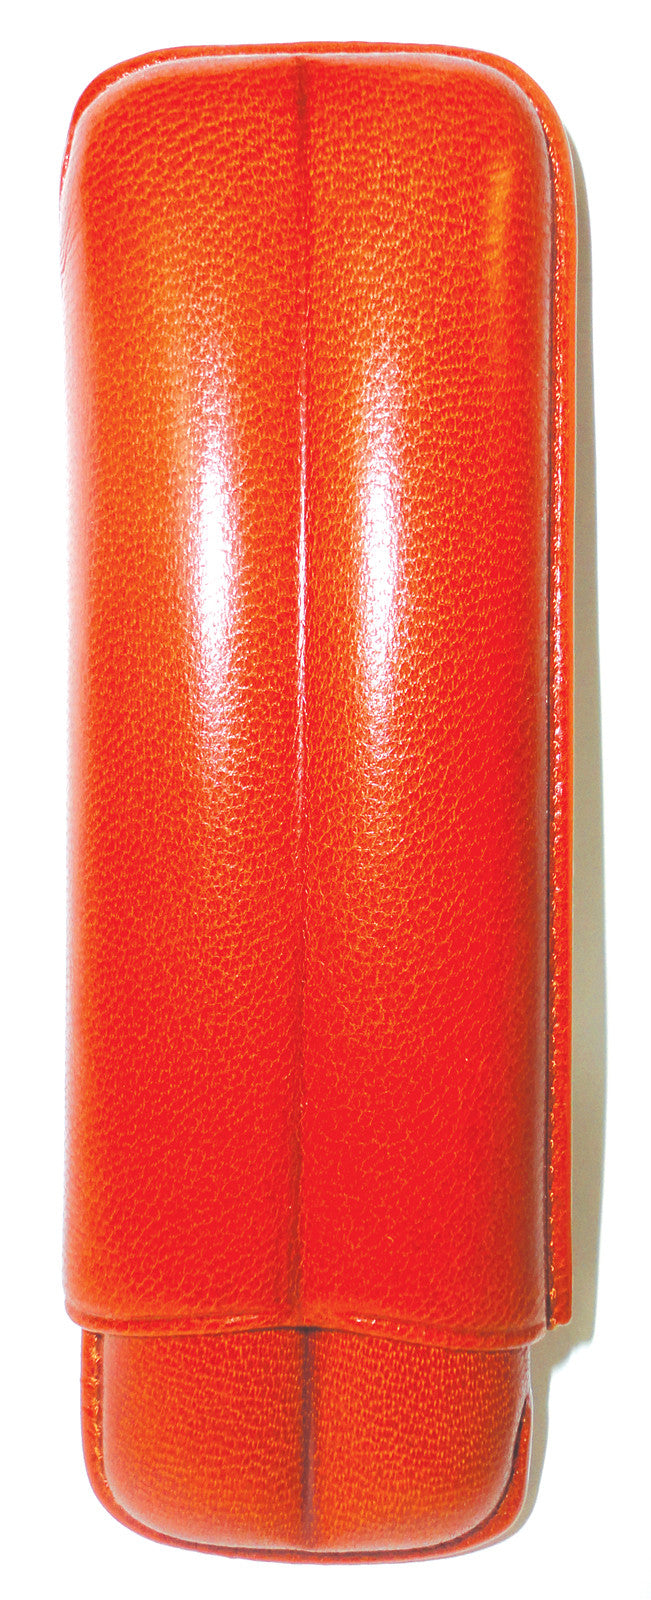 BigBen genuine leather cigar case 2 corona cognac 640.095.250